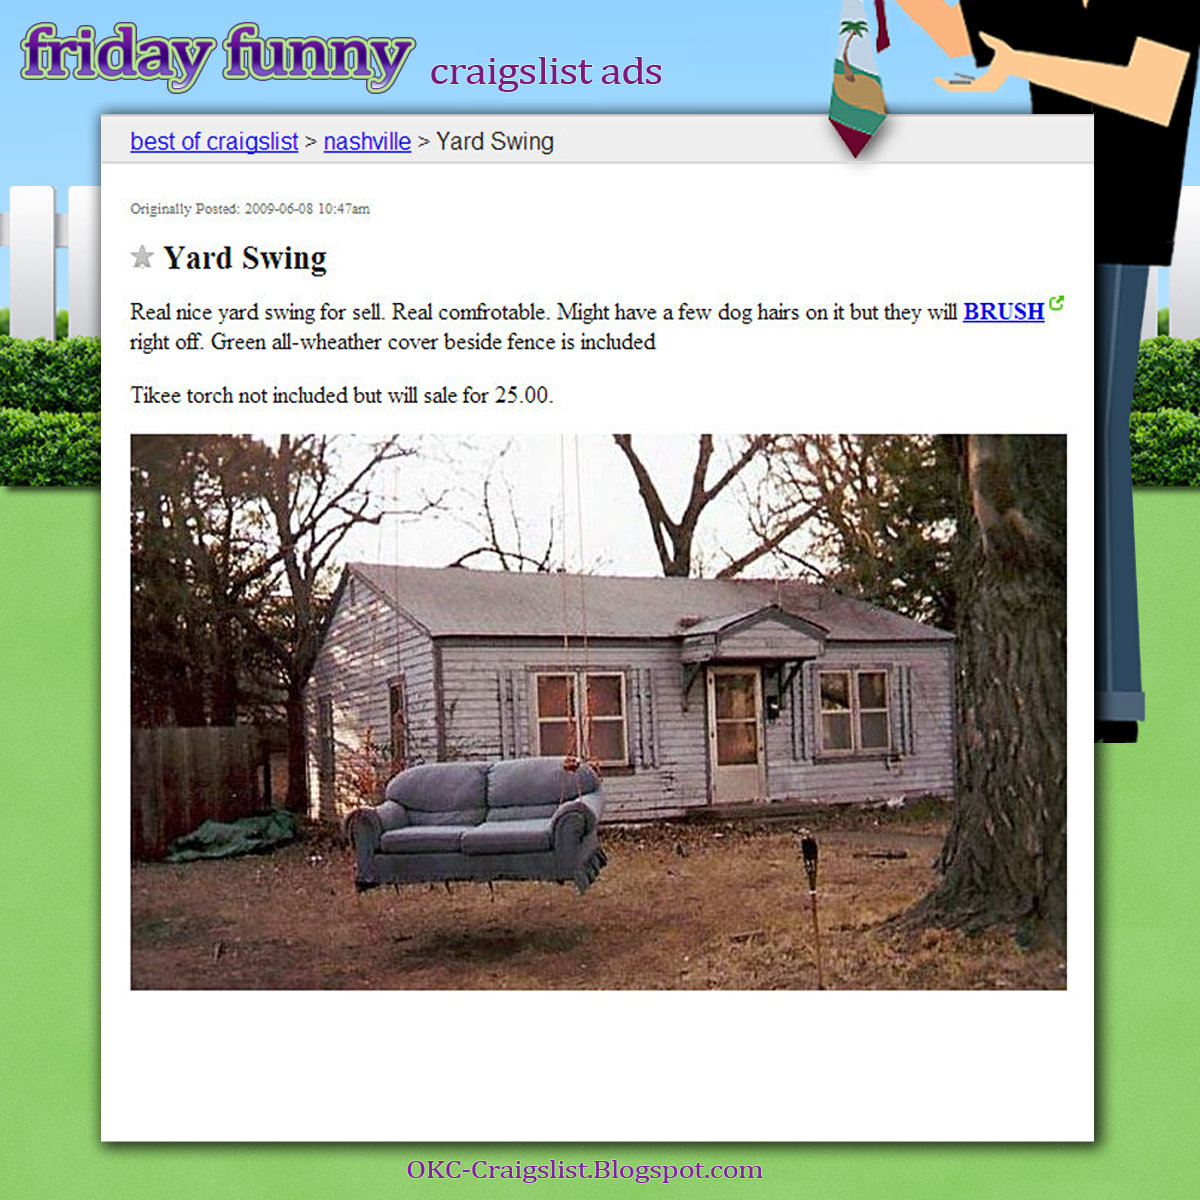 FUNNY CRAIGSLIST ADS: Redneck Yard Swing | Craigslist ...